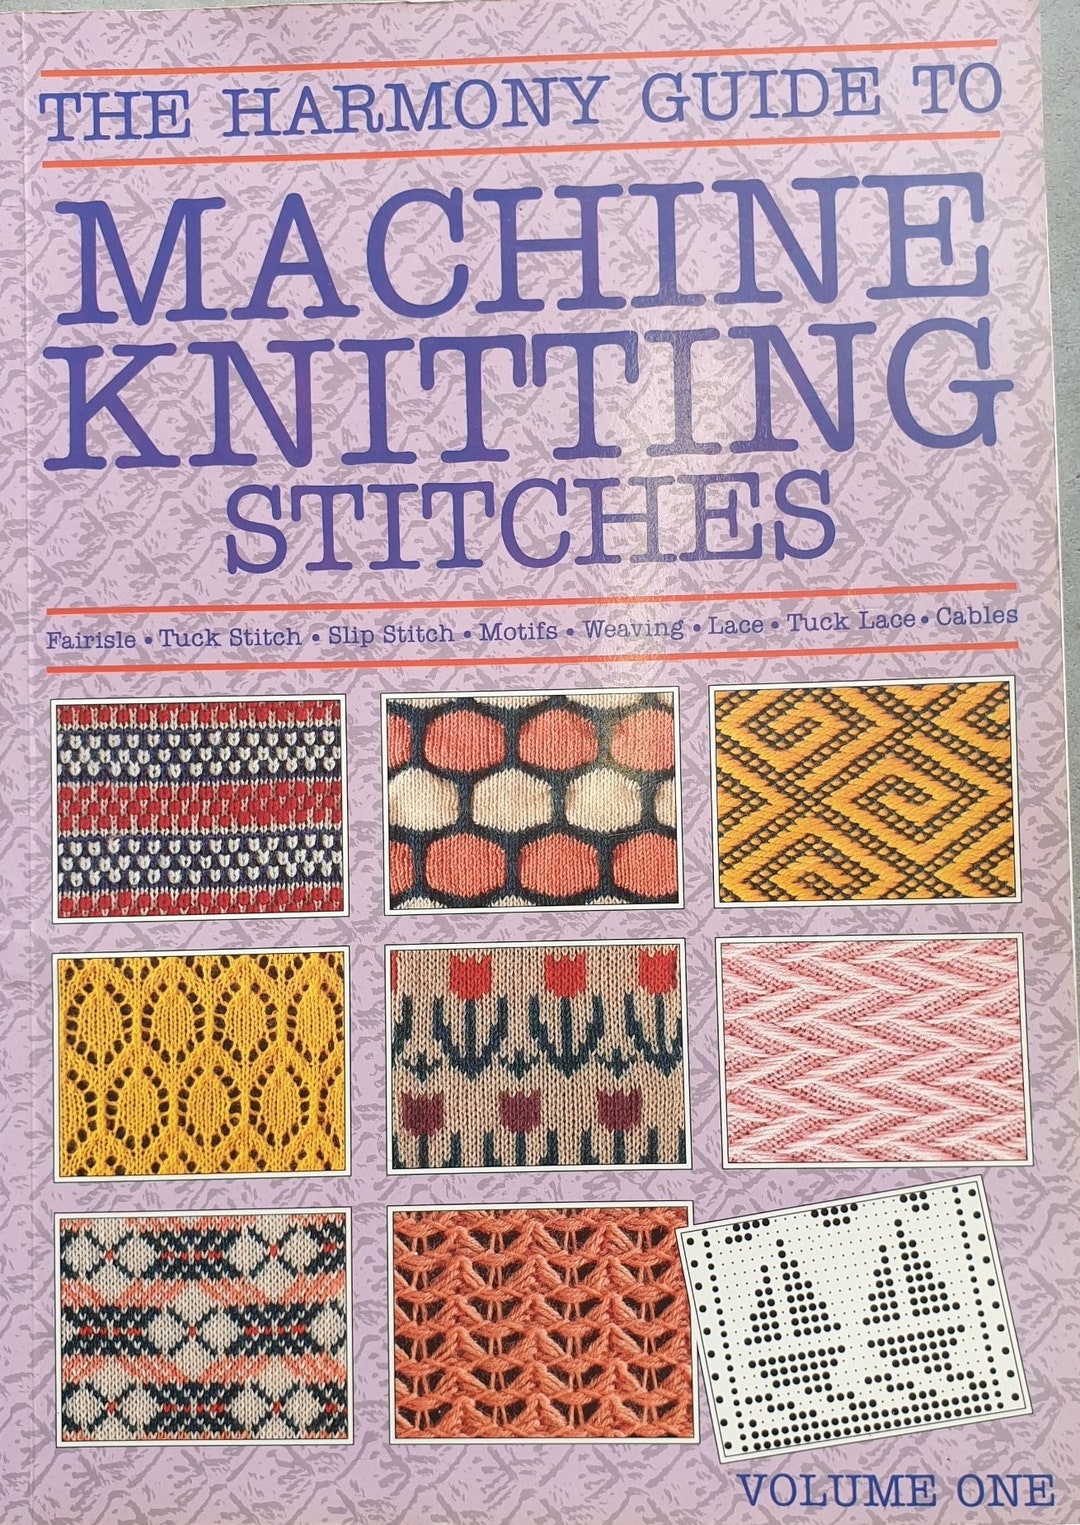 Electric Knitting Machie Adapter for Addi 46 Needles Knitting Machine 